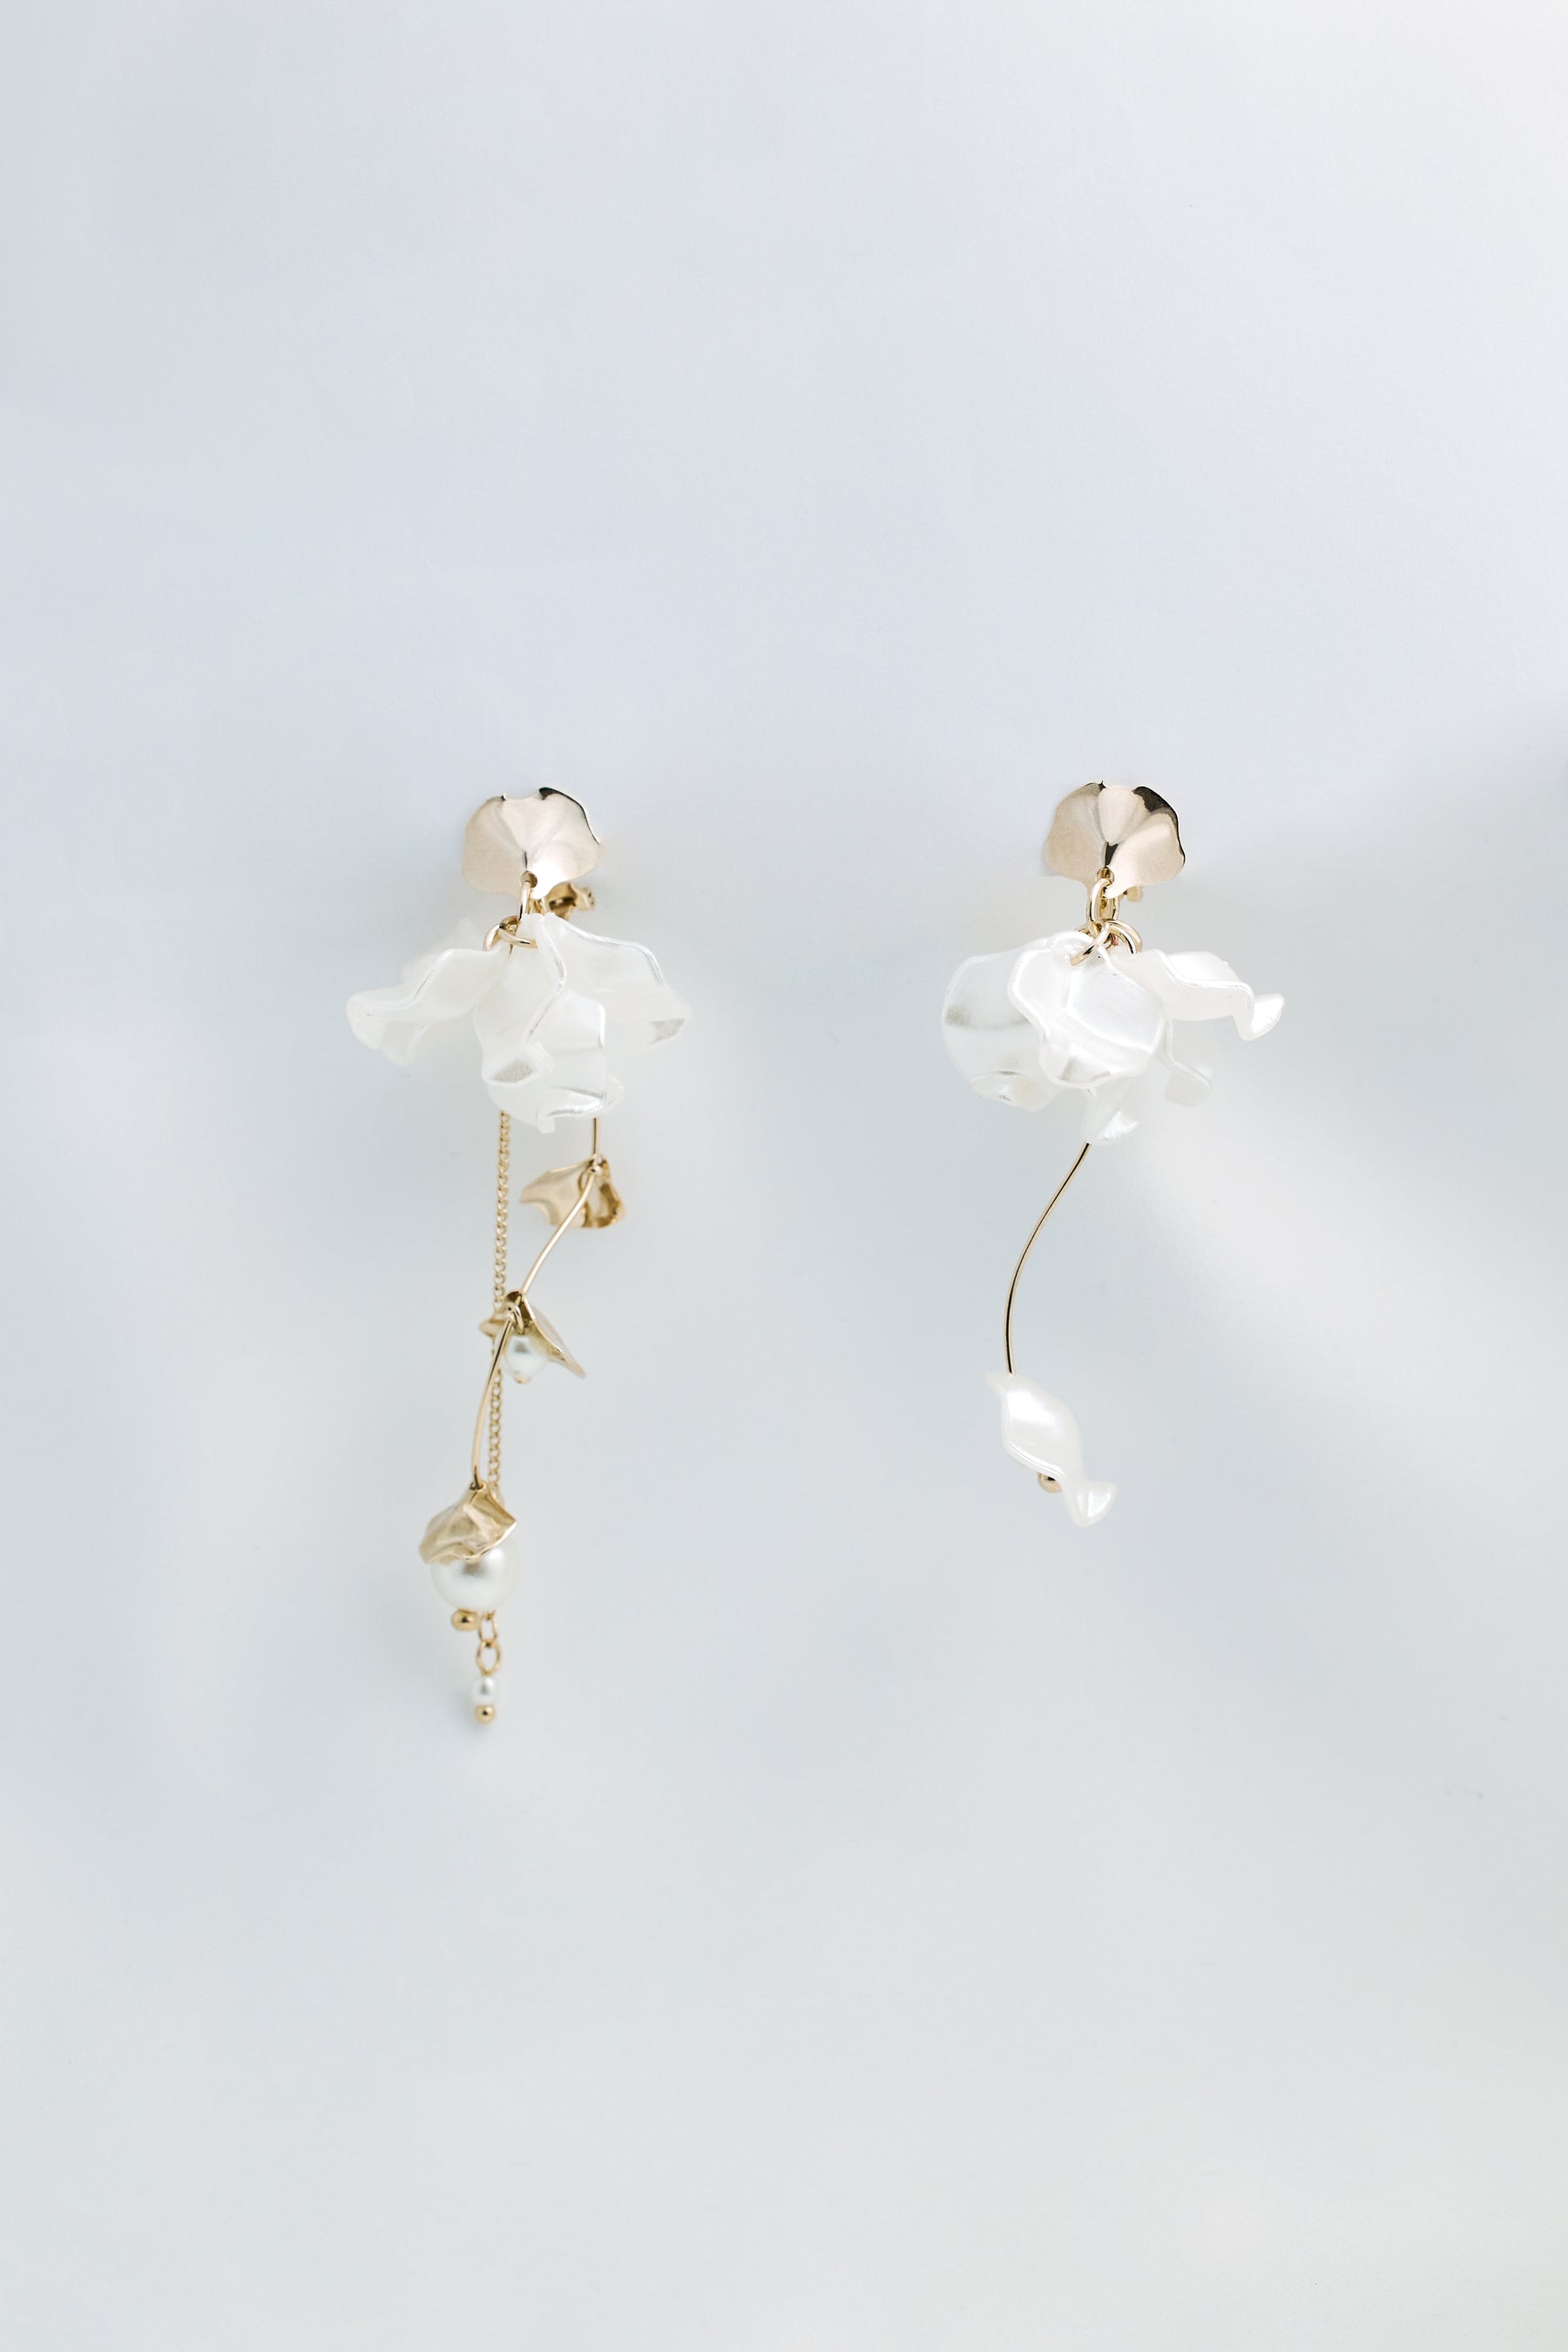 【4月中旬出貨】Clear Flower Gold Tone Earrings